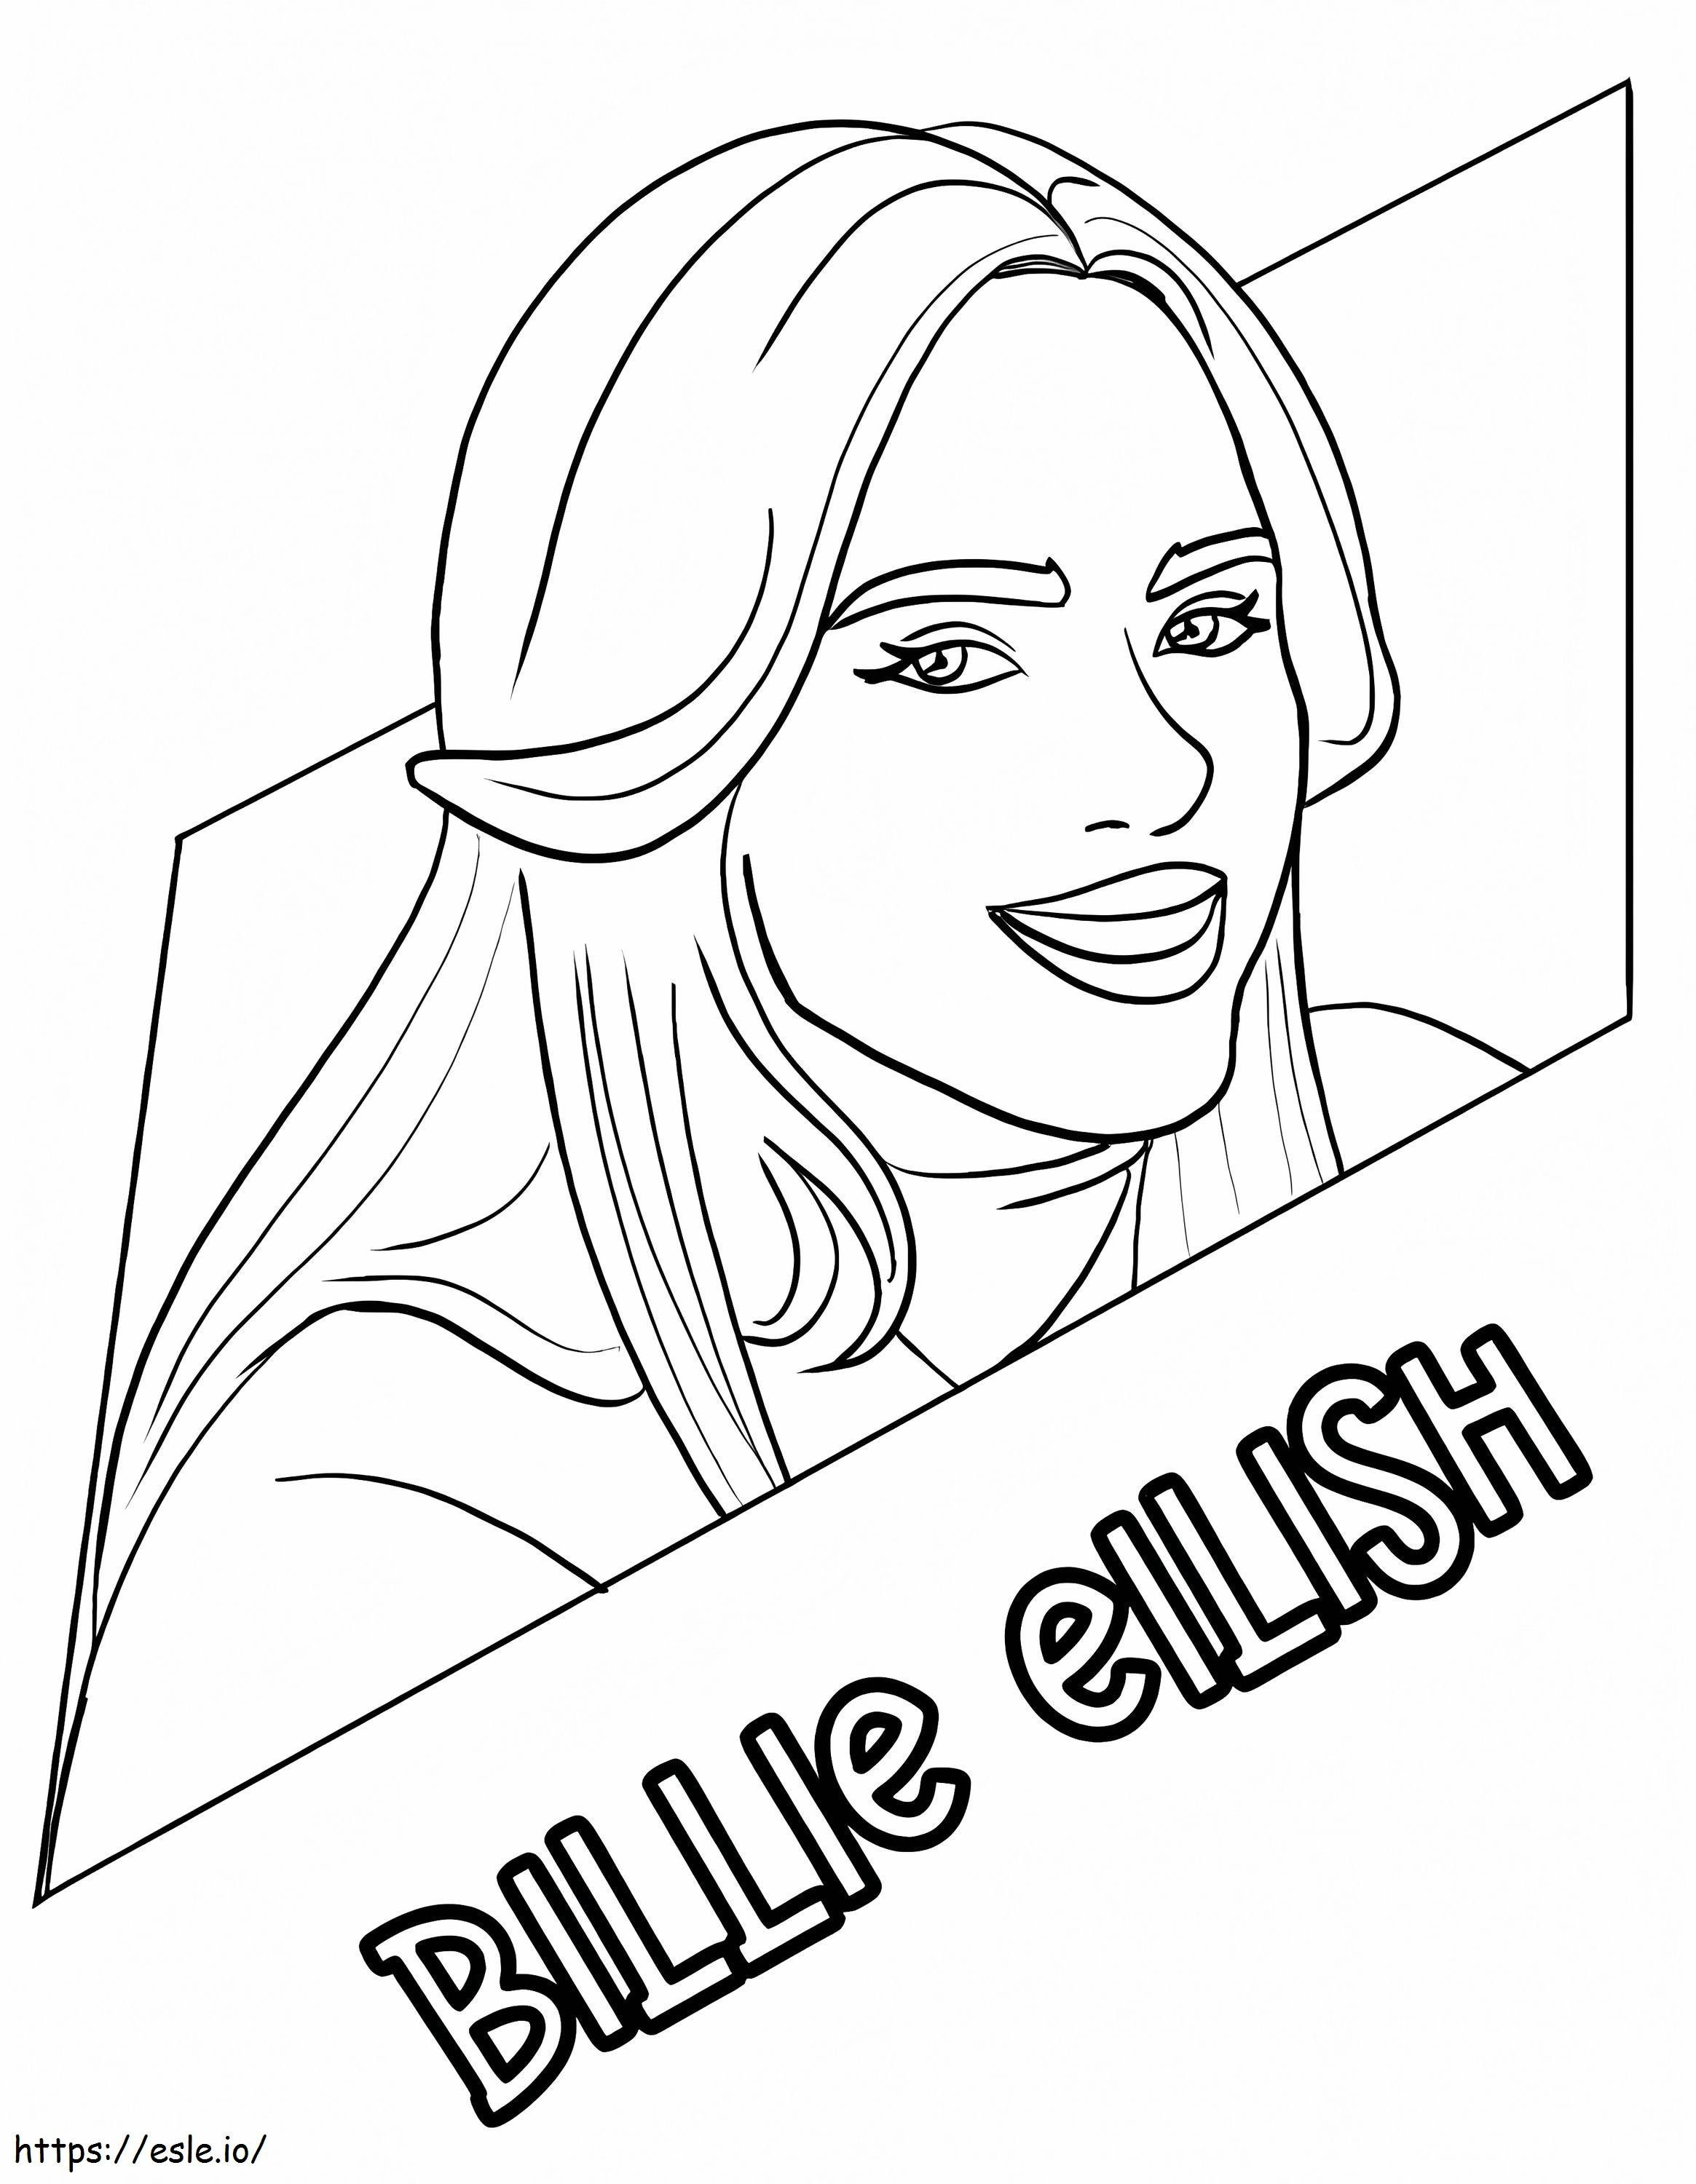 Happy Billie Eilish coloring page